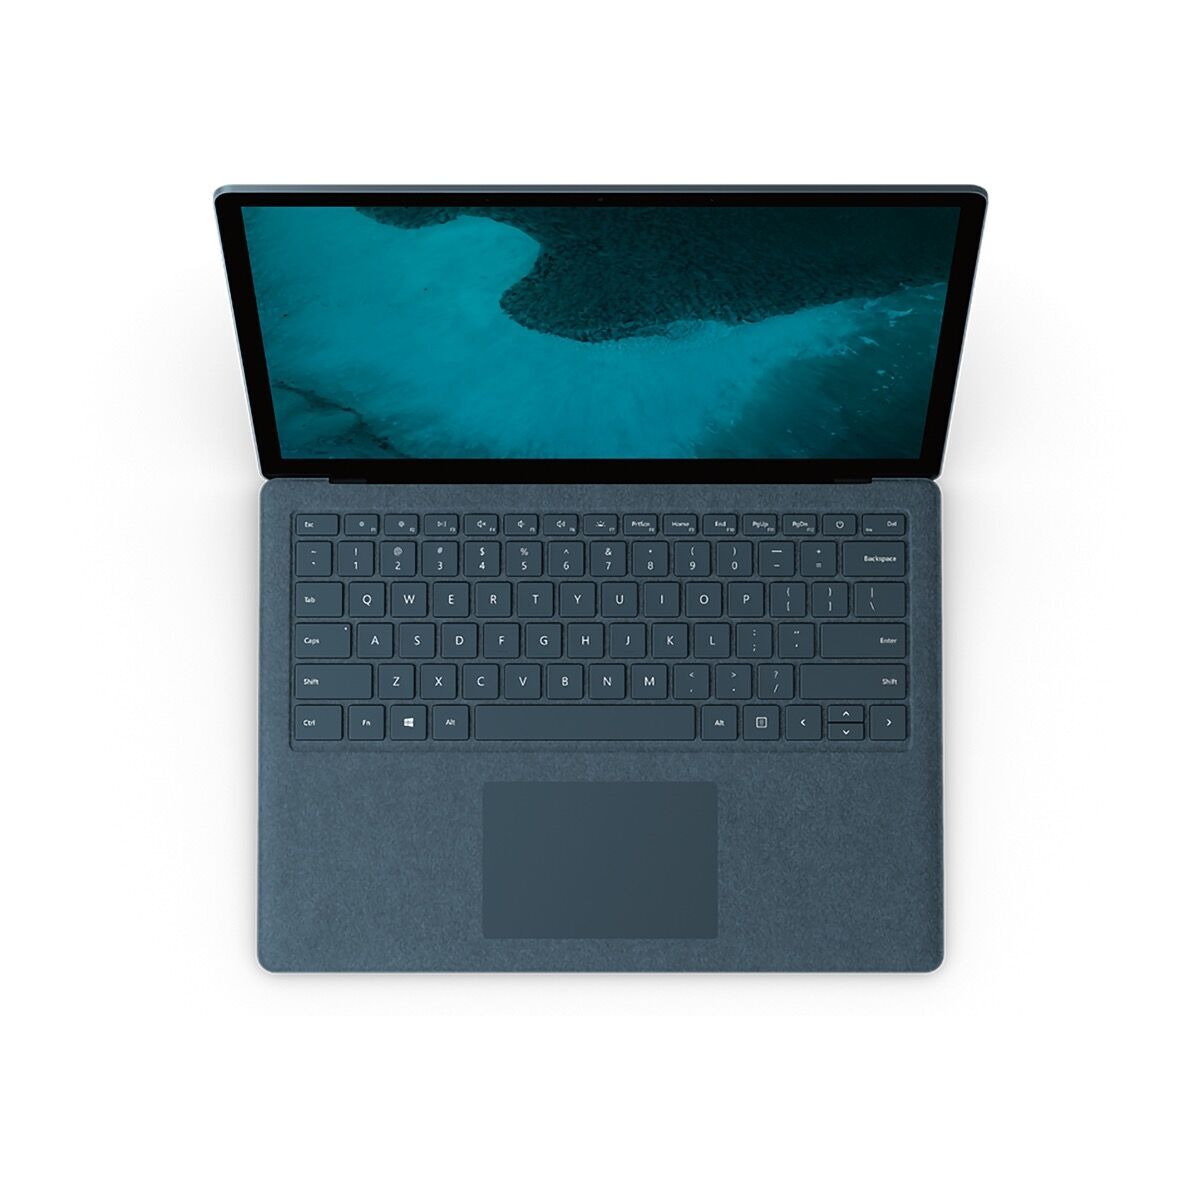 Microsoft Surface Laptop 2 Core i7 8GB 256GB - Cobalt Blue - LQQ-00038